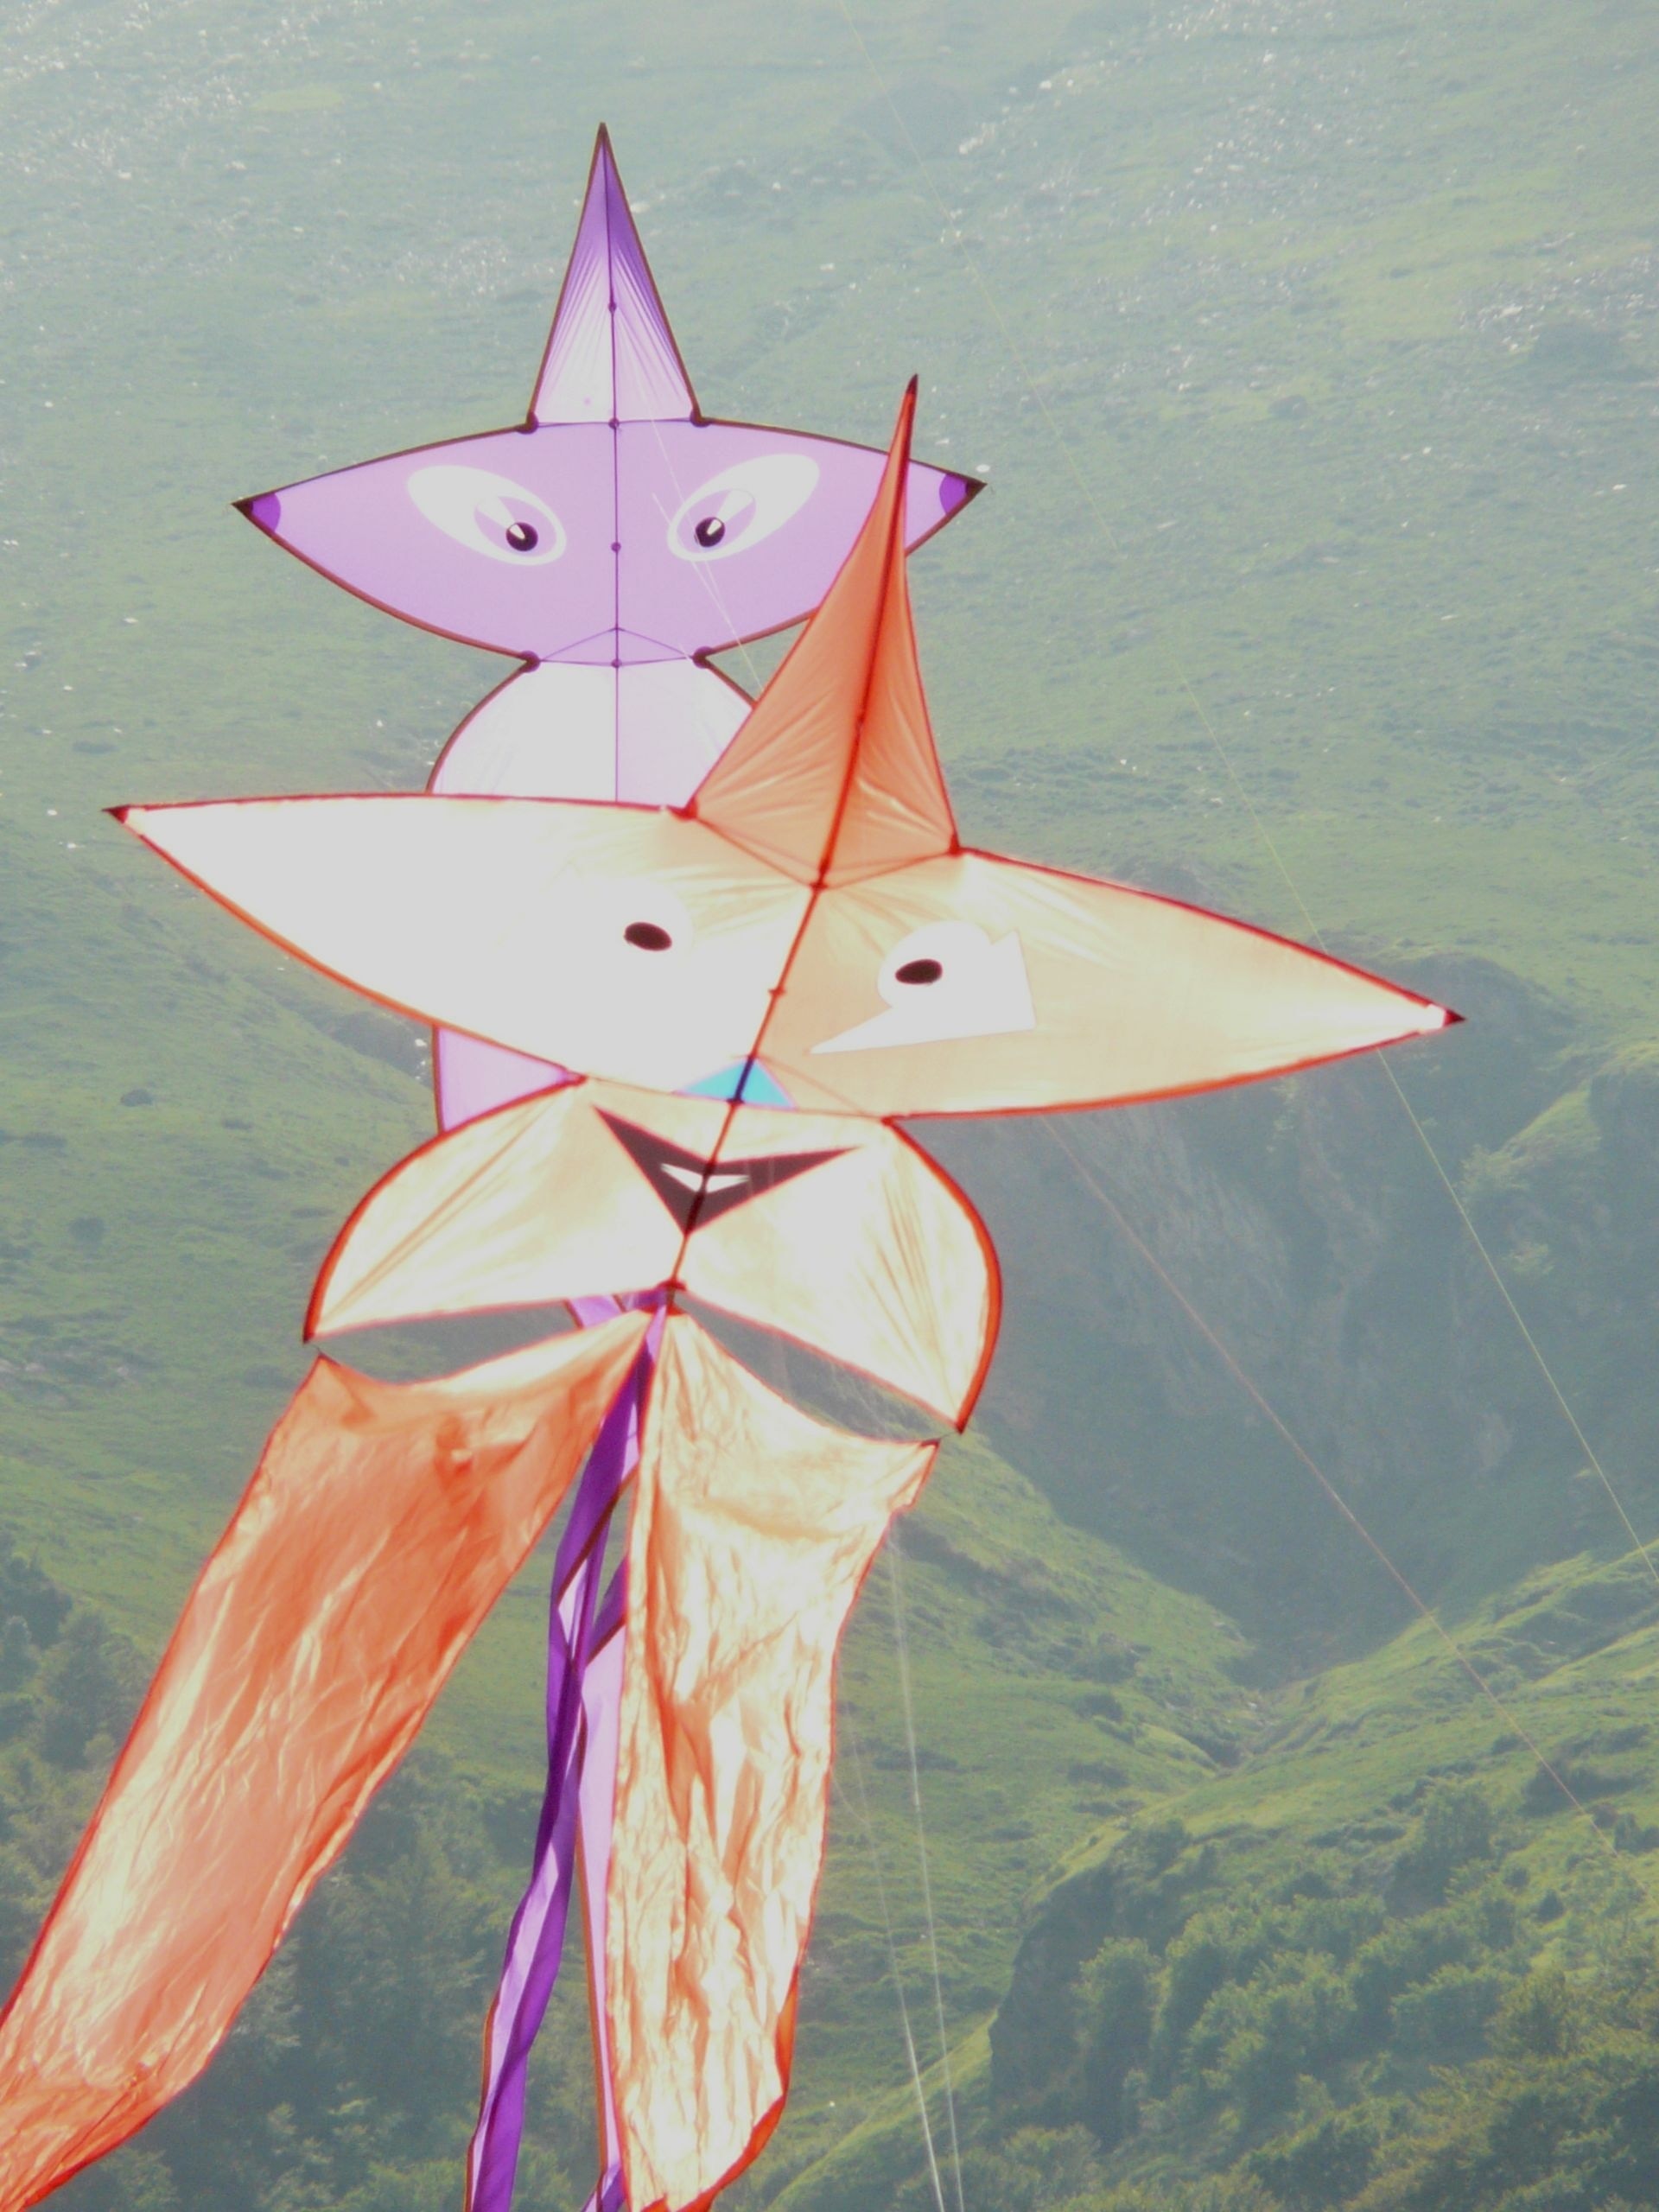 orange and purple star kites